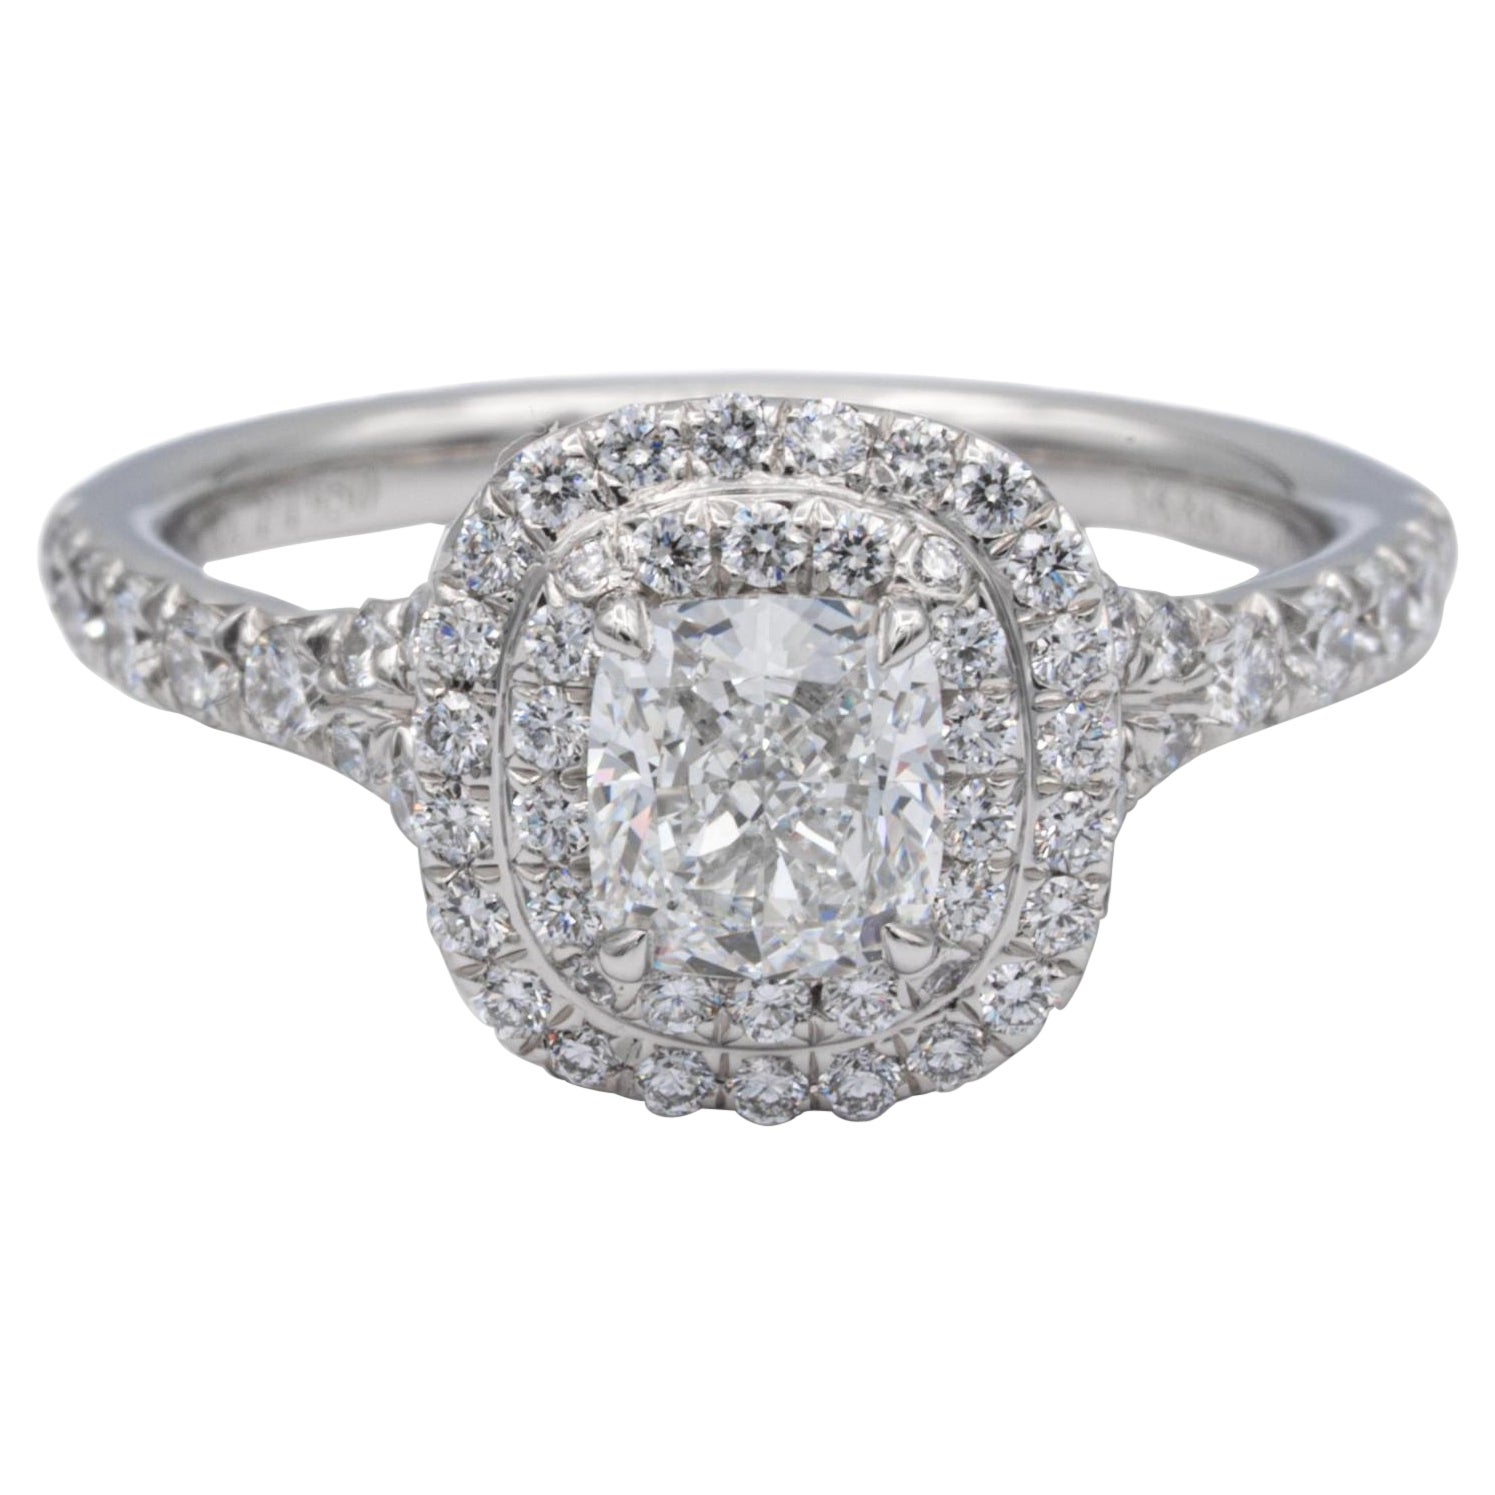 Tiffany & Co. Double Soleste Platinum Diamond Engagement Ring 0.86 Carats Total